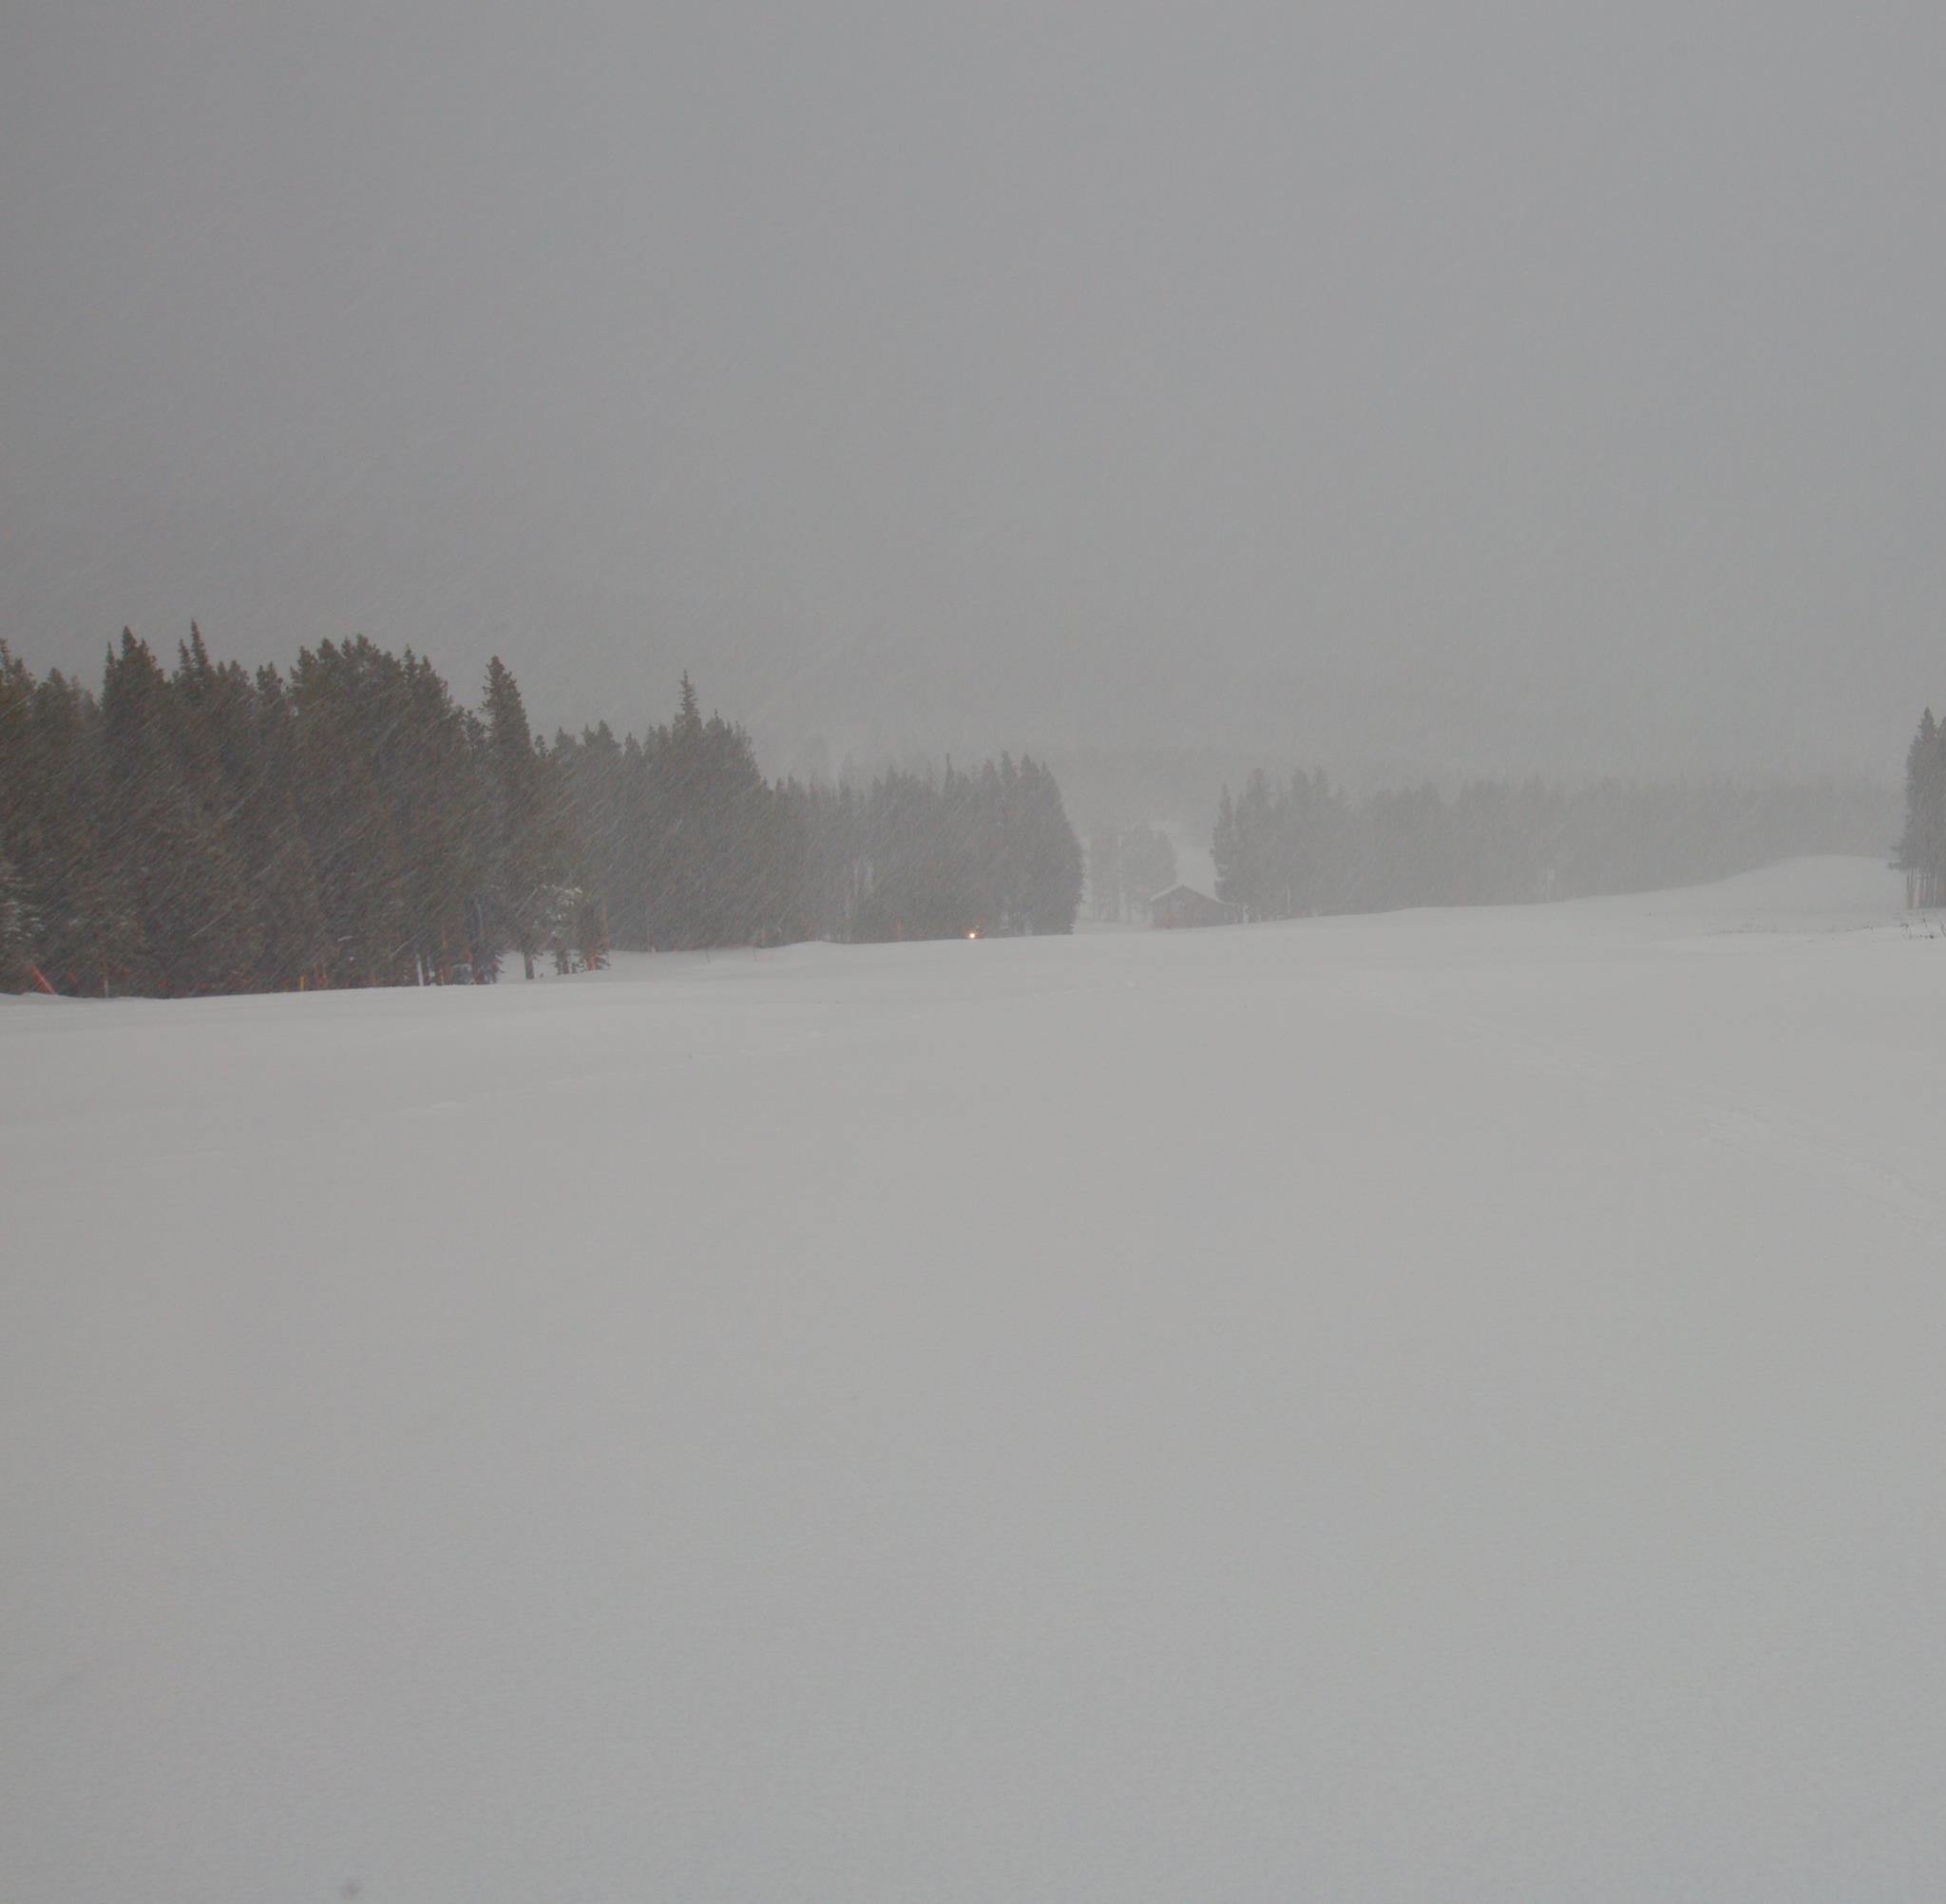 Heavy Snowfall at Breckenridge this afternoon! PC: Breckenridge Facebook Page